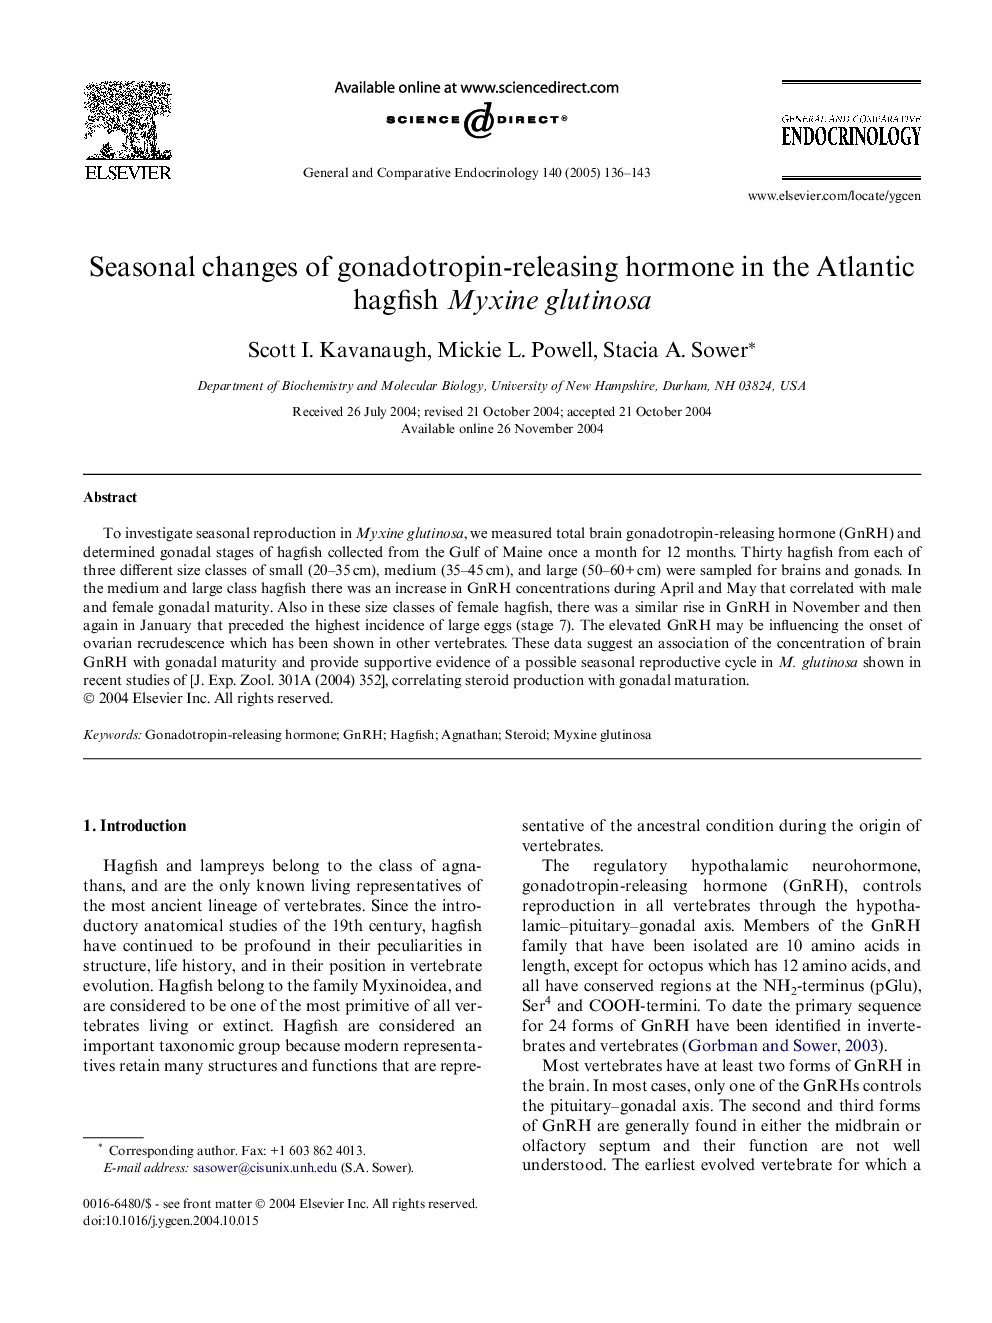 Seasonal changes of gonadotropin-releasing hormone in the Atlantic hagfish Myxine glutinosa